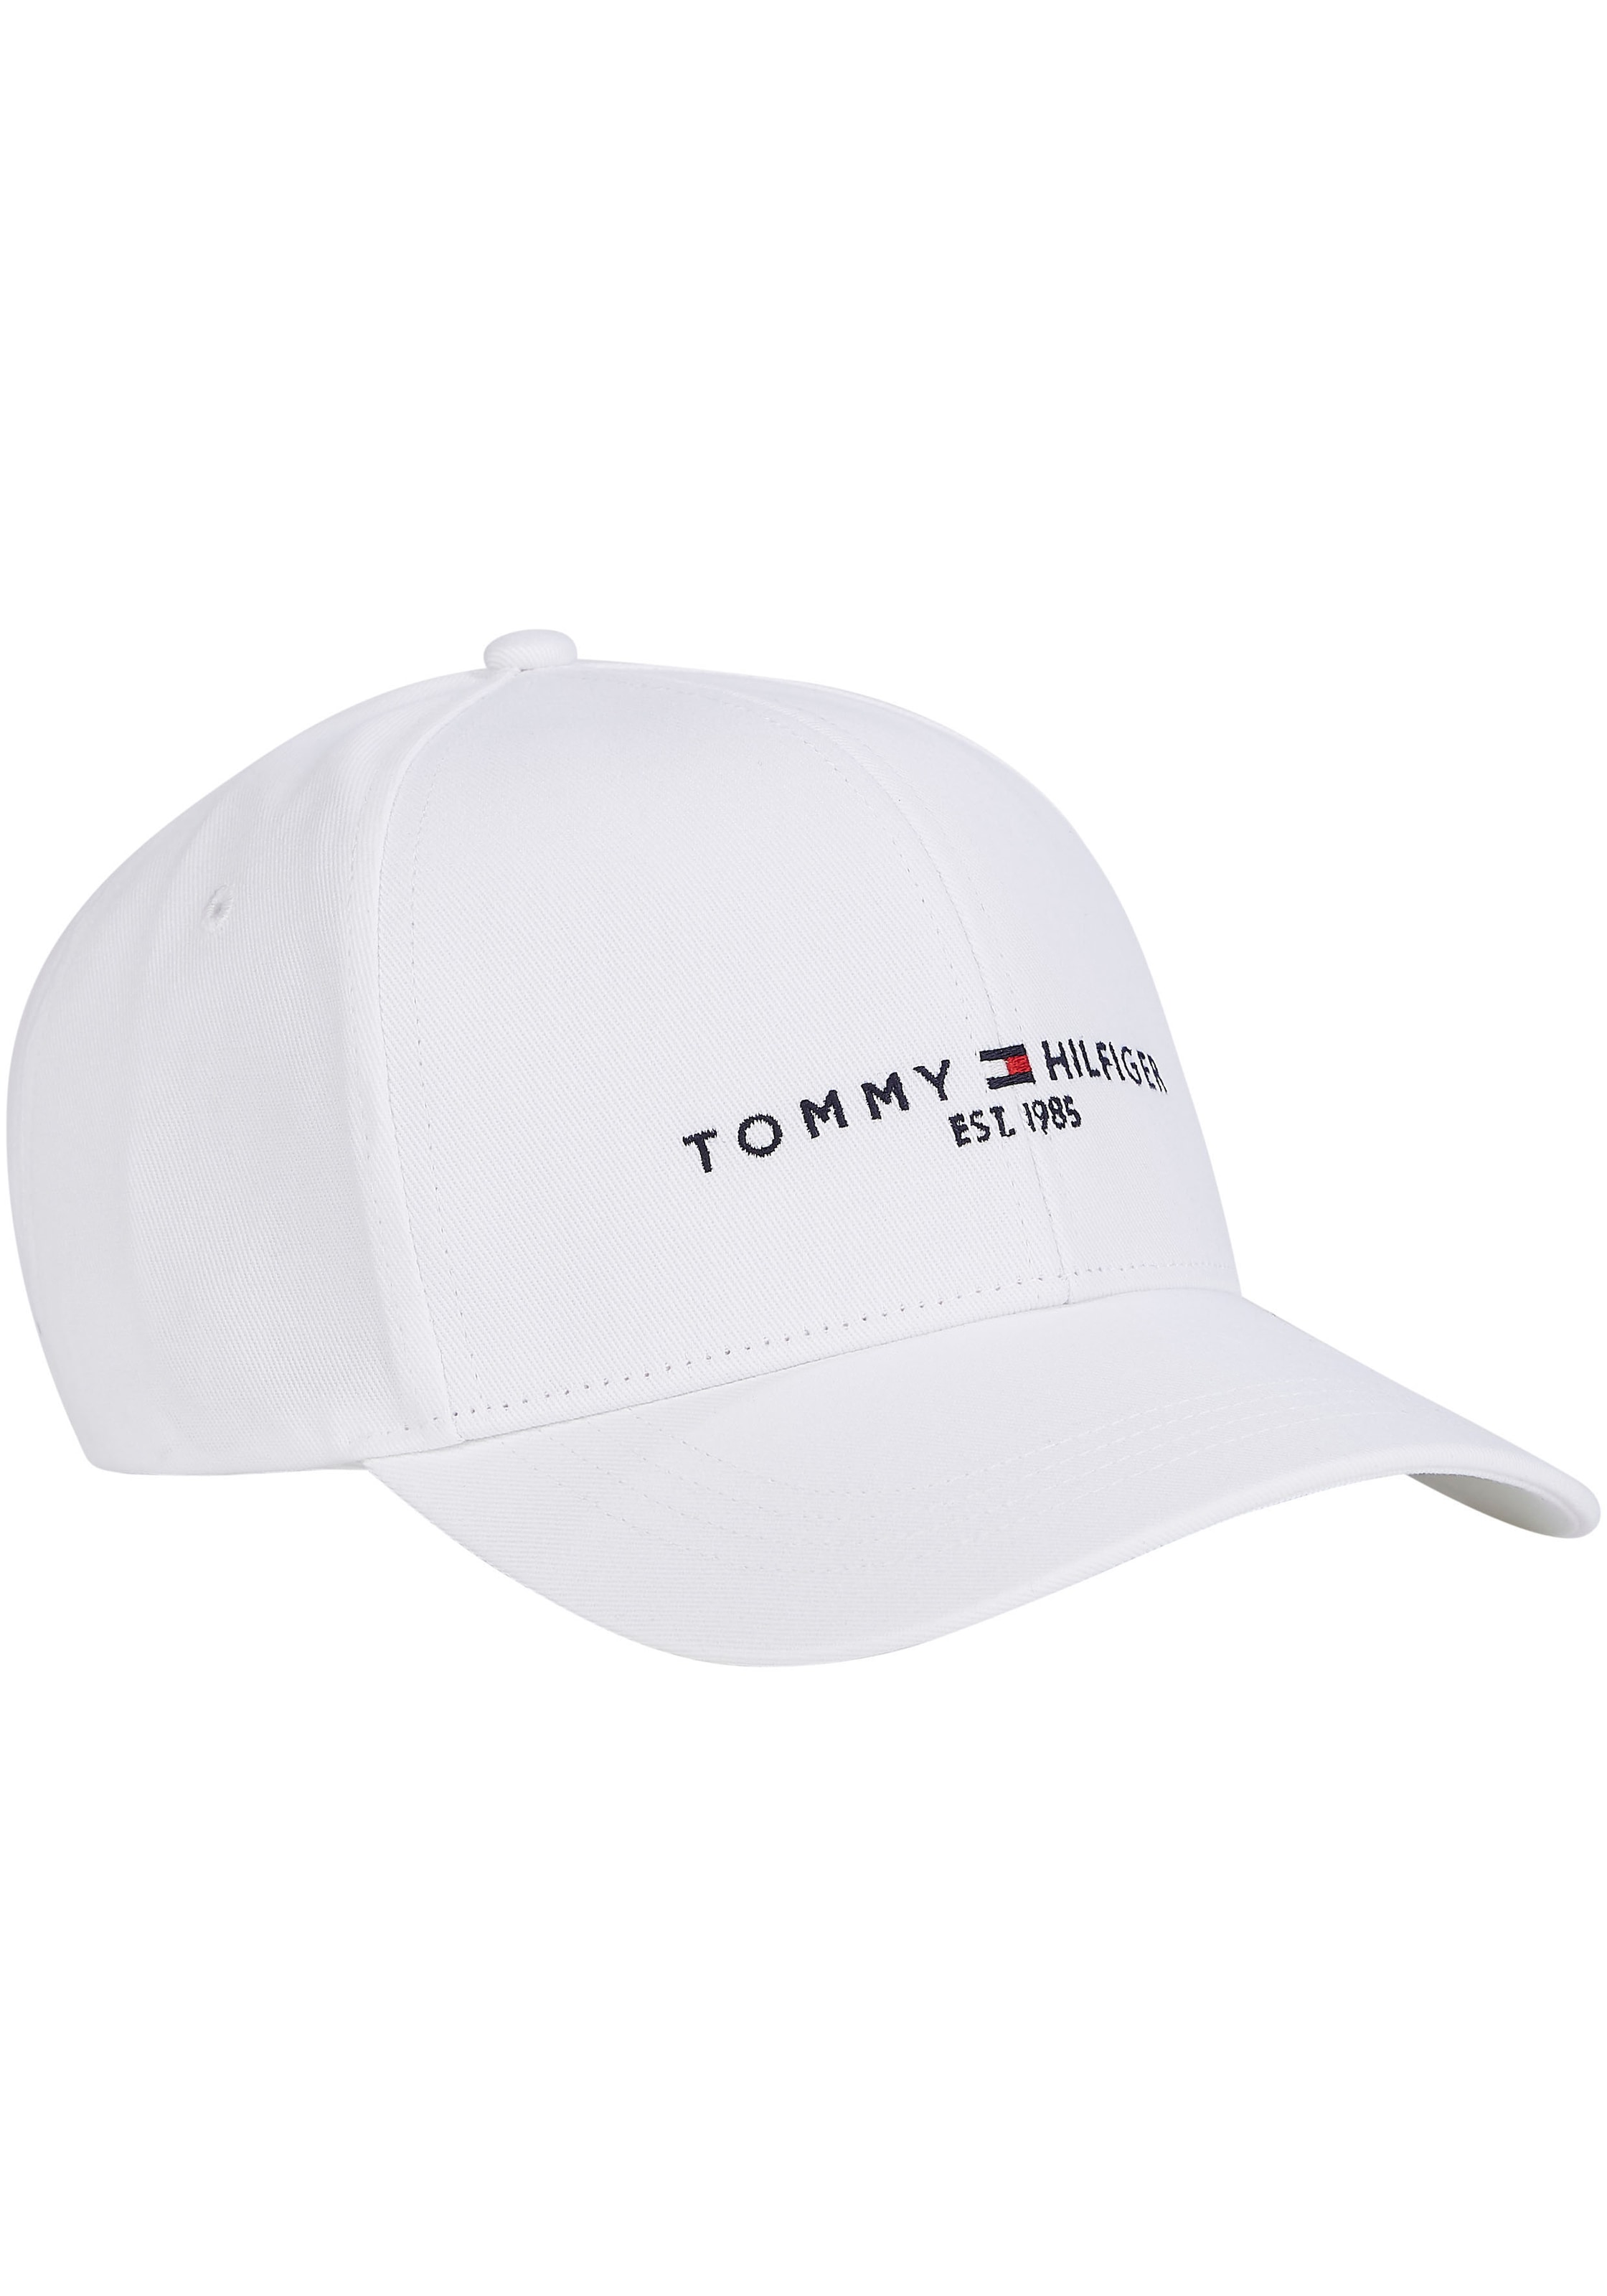 Tommy Hilfiger Baseball Cap online kaufen | I'm walking